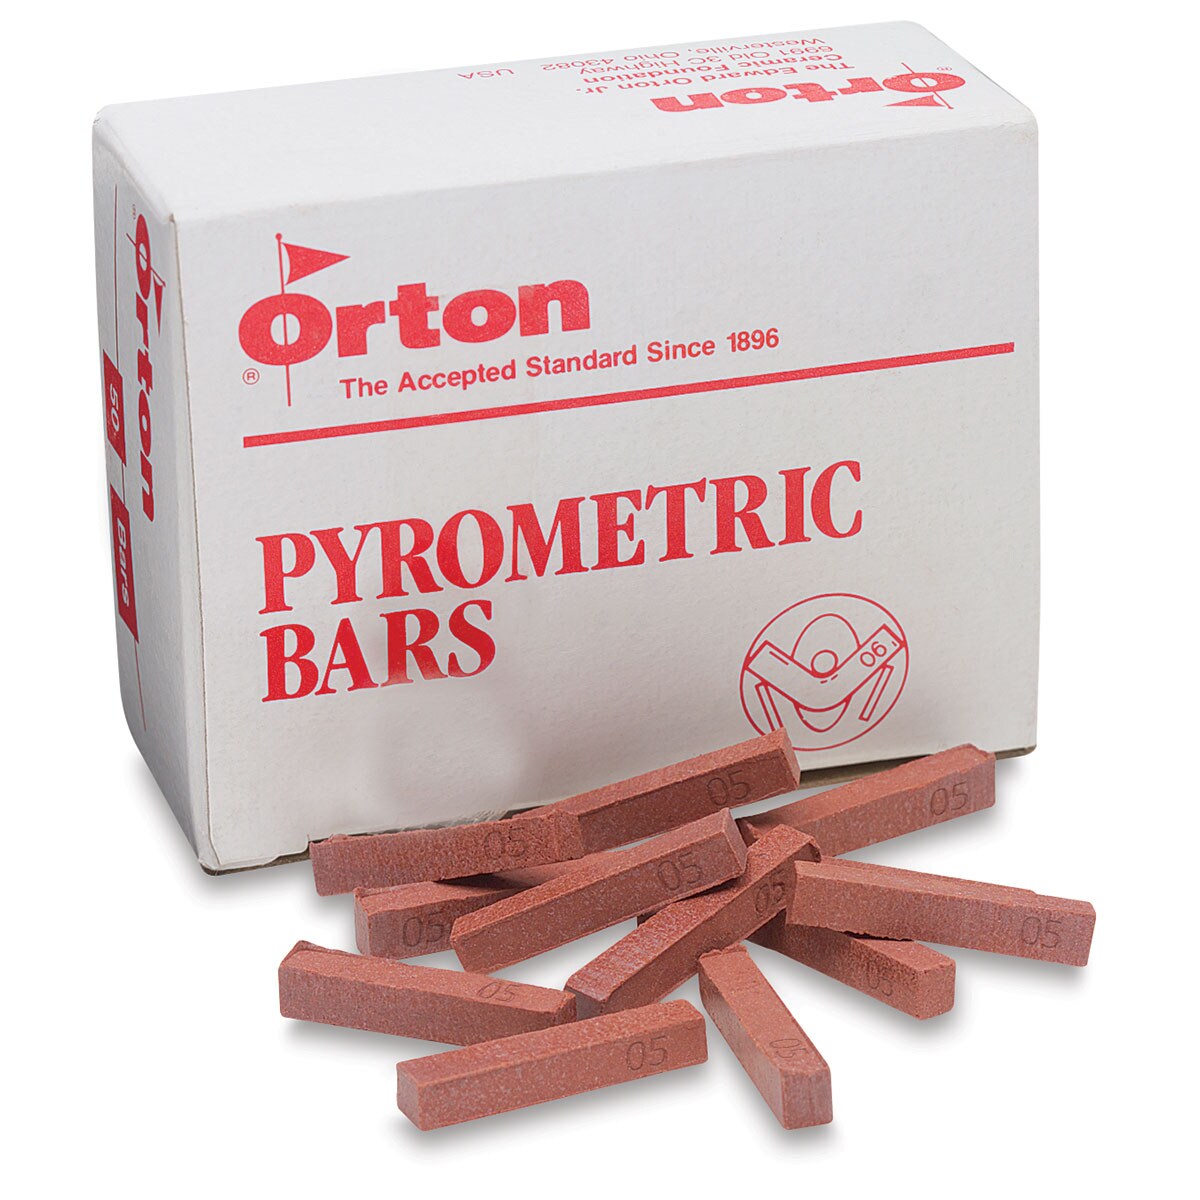 Orton Pyrometric Mini Bars, Cone 05 - Box of 50